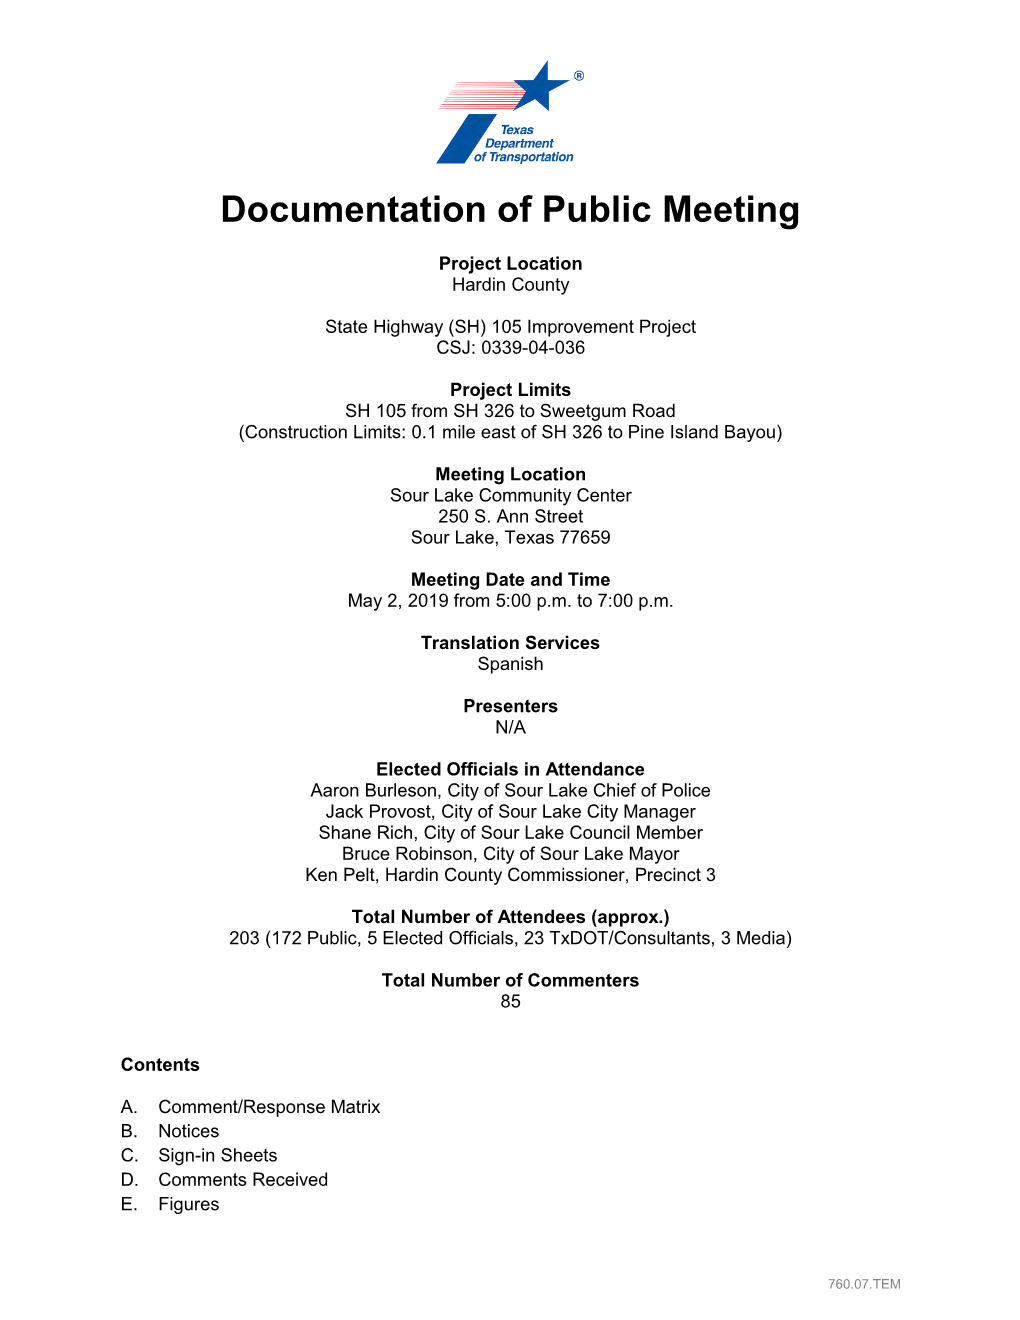 Public Meeting Summary Report